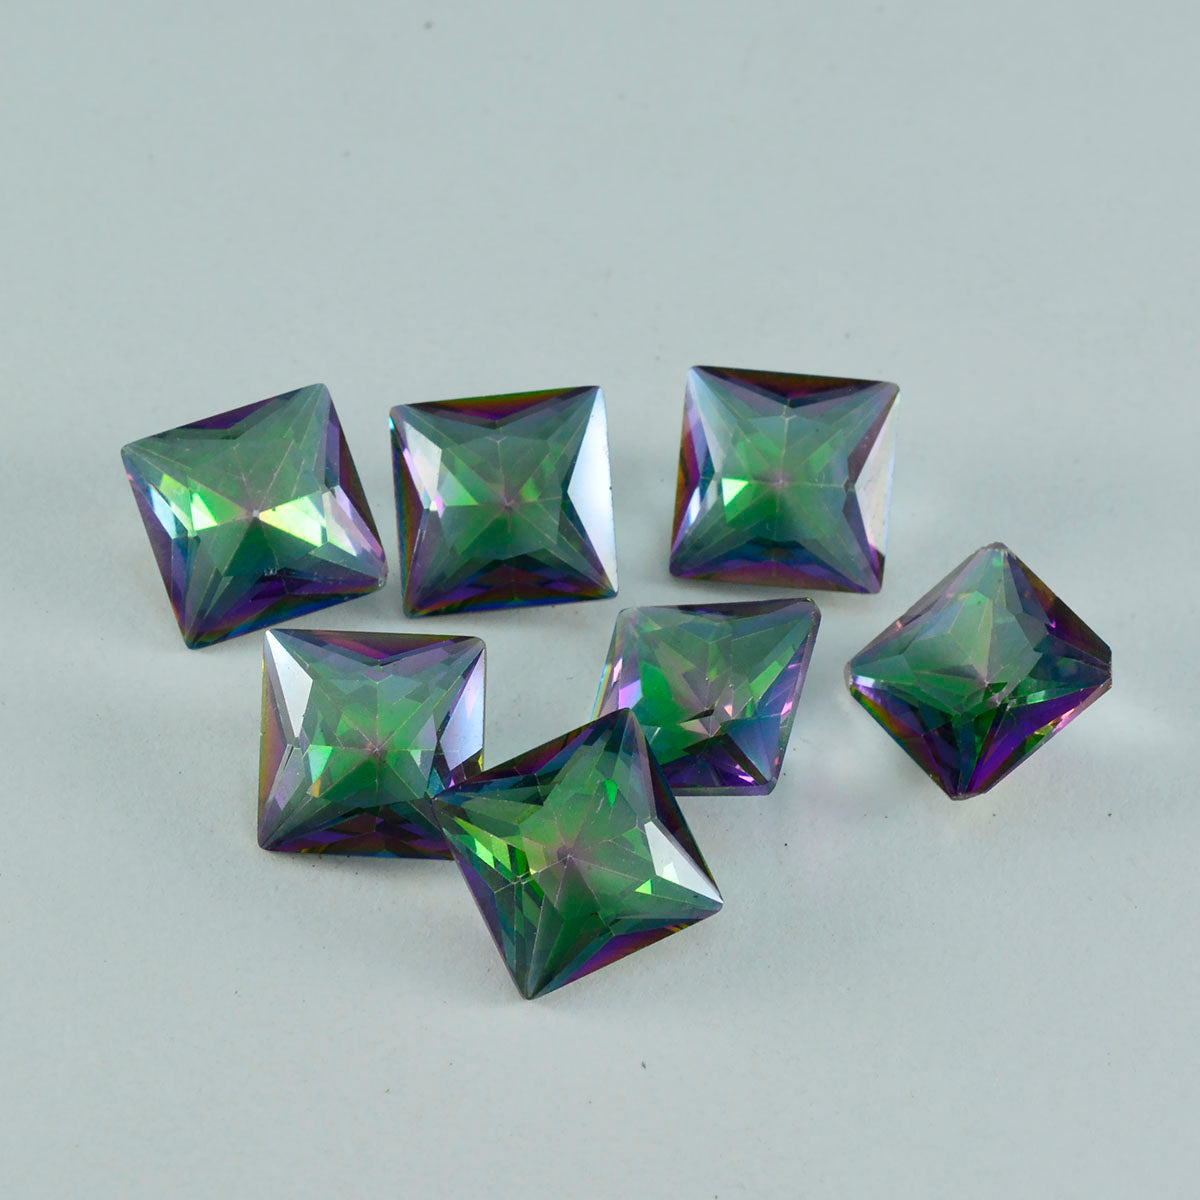 Riyogems 1PC Multi Color Mystic Quartz Faceted 12x12 mm Square Shape excellent Quality Gemstone